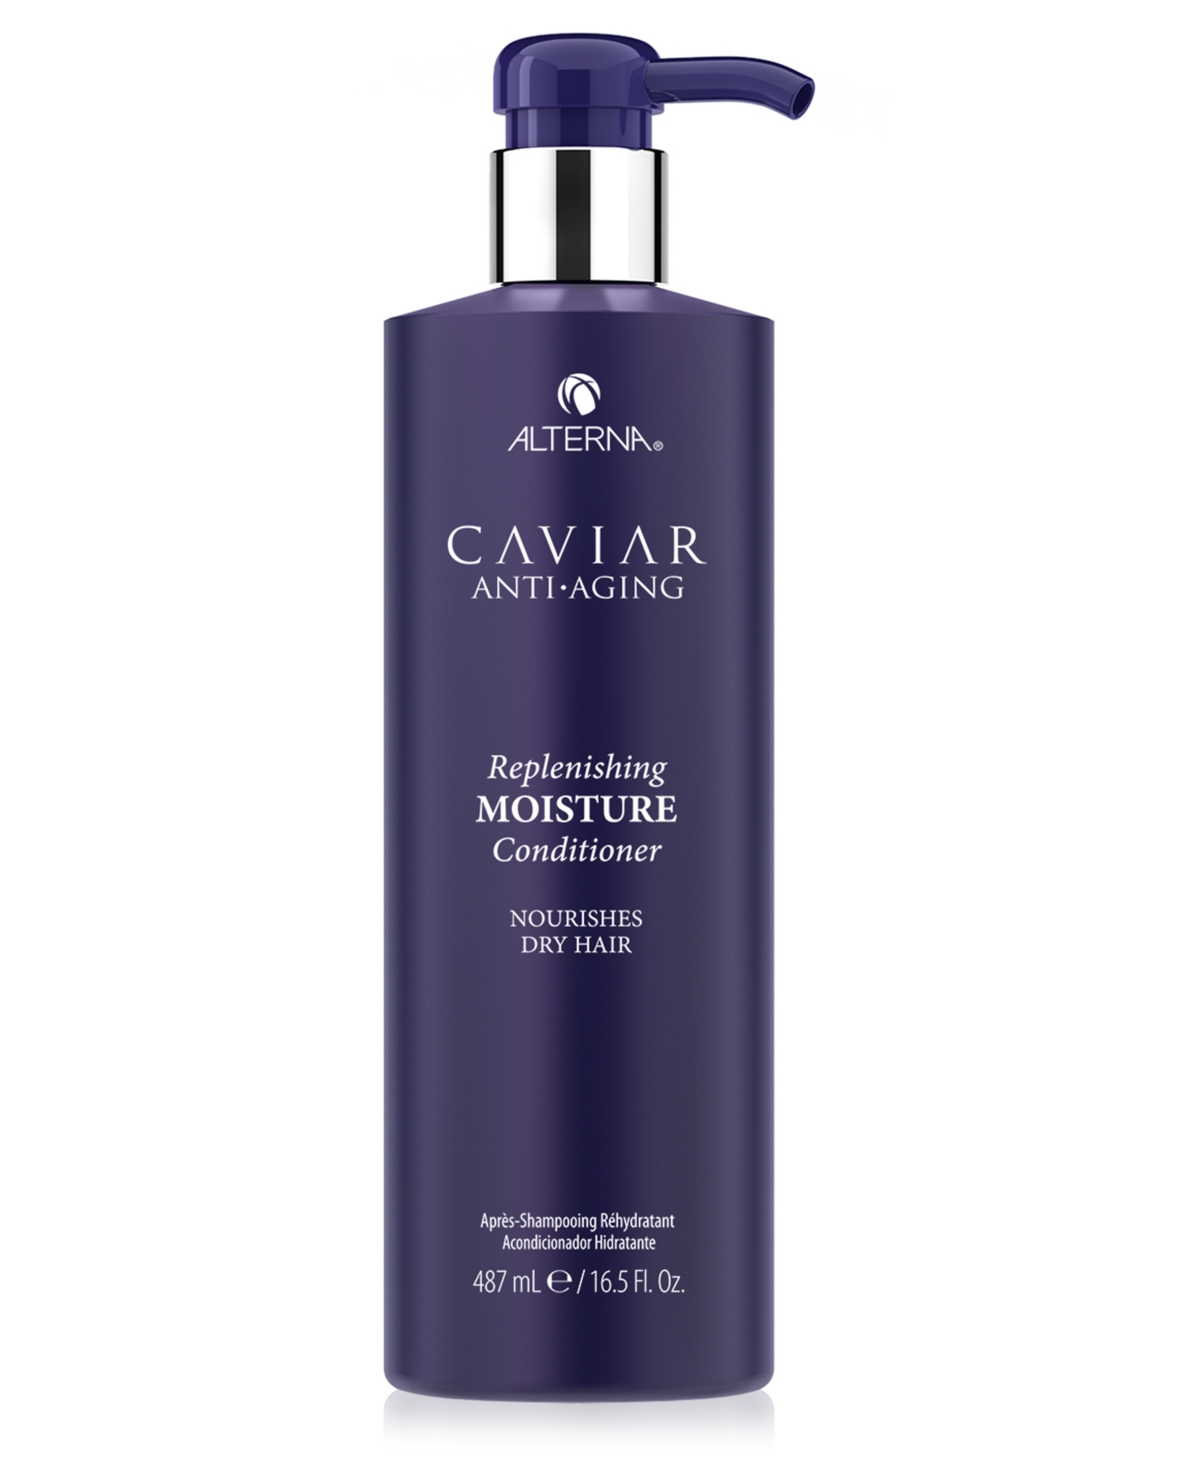 Caviar Anti-Aging Replenishing Moisture Conditioner, 16.5-oz.